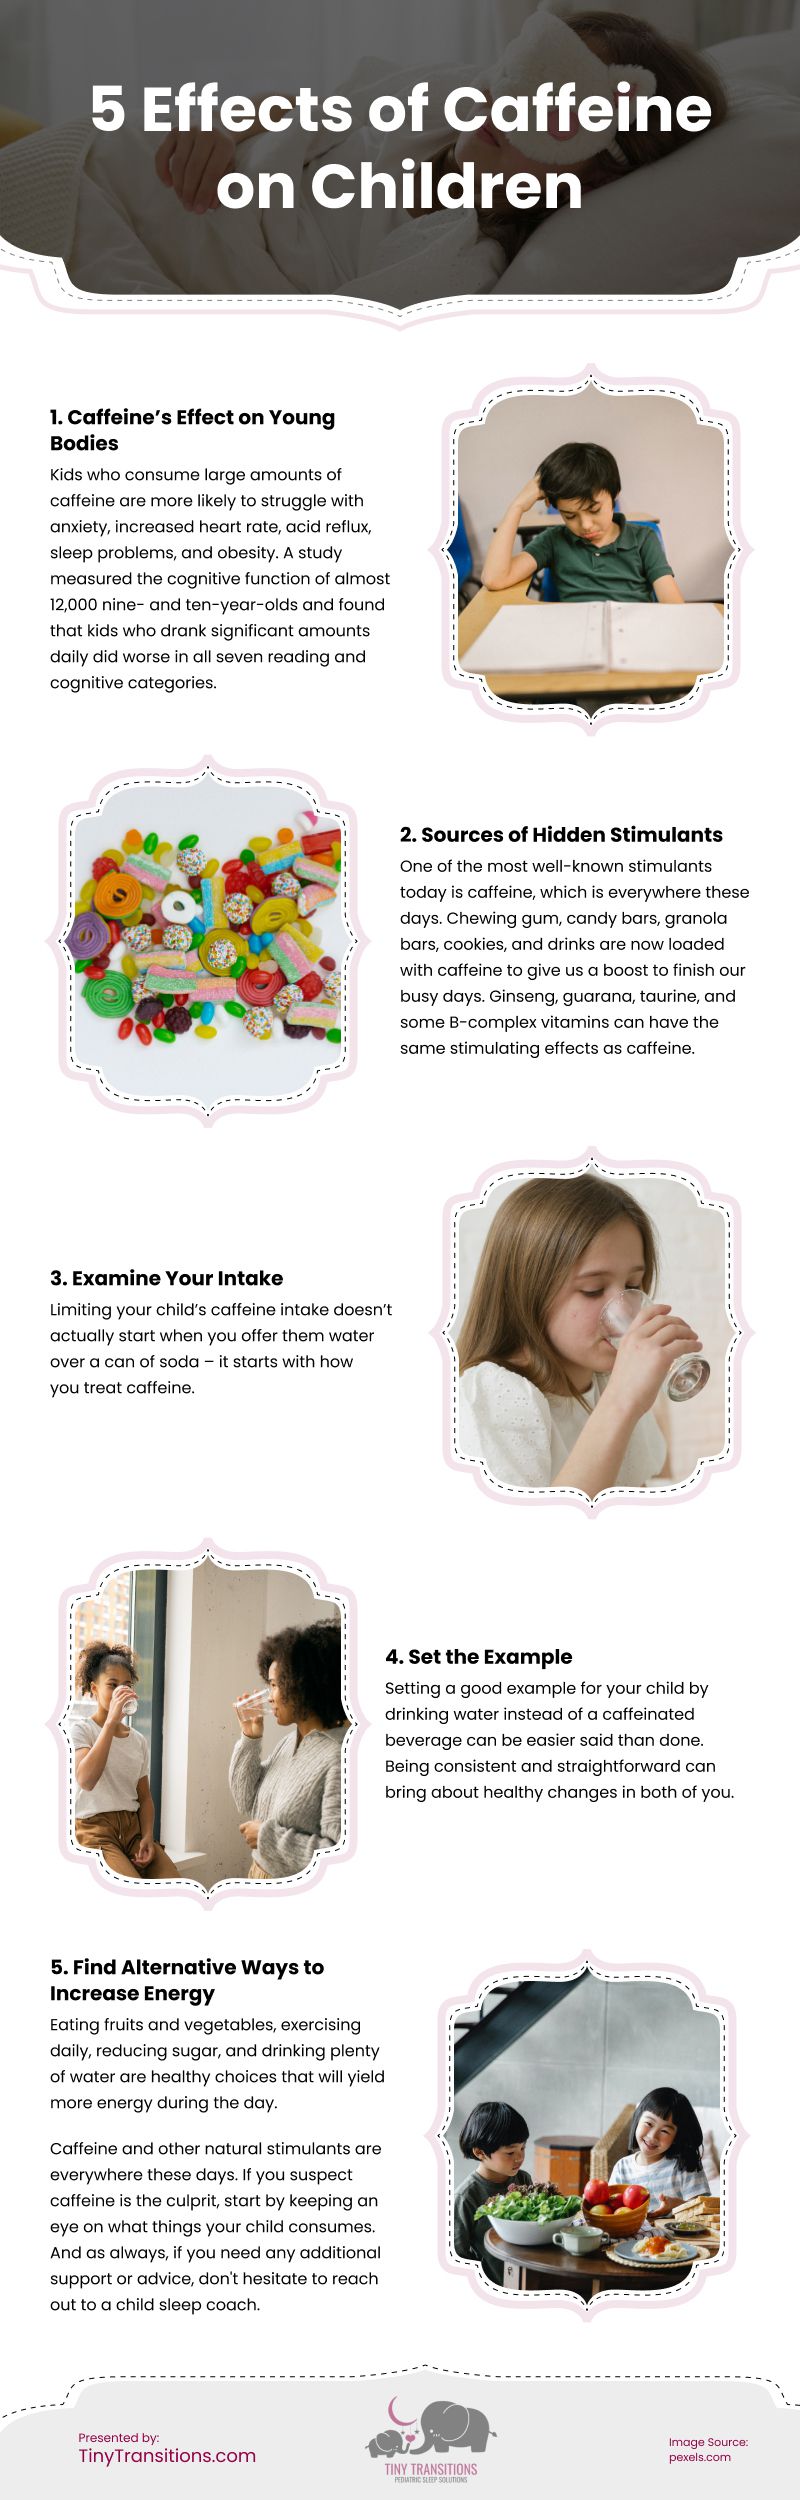 5 Effects of Caffeine on Children Infographic